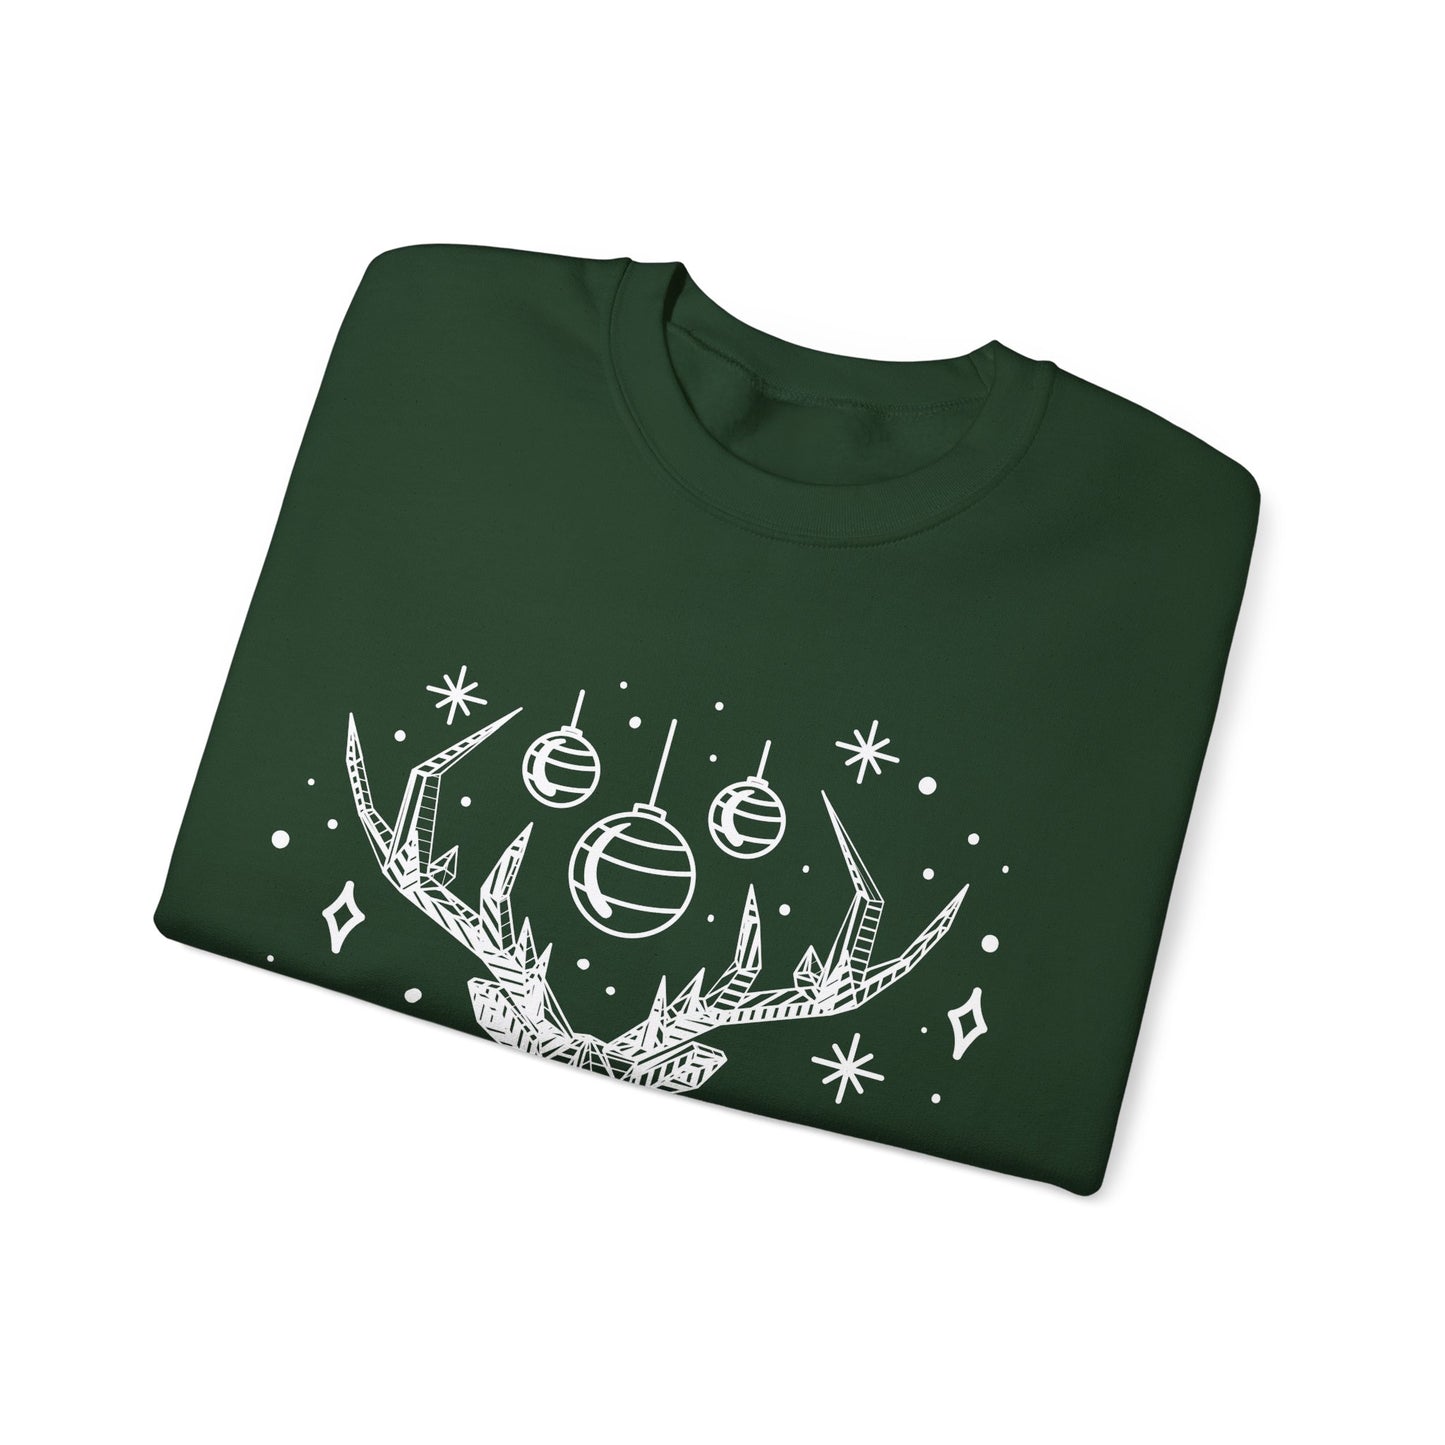 Reindeer Games Heavy Blend™ Sweatshirt